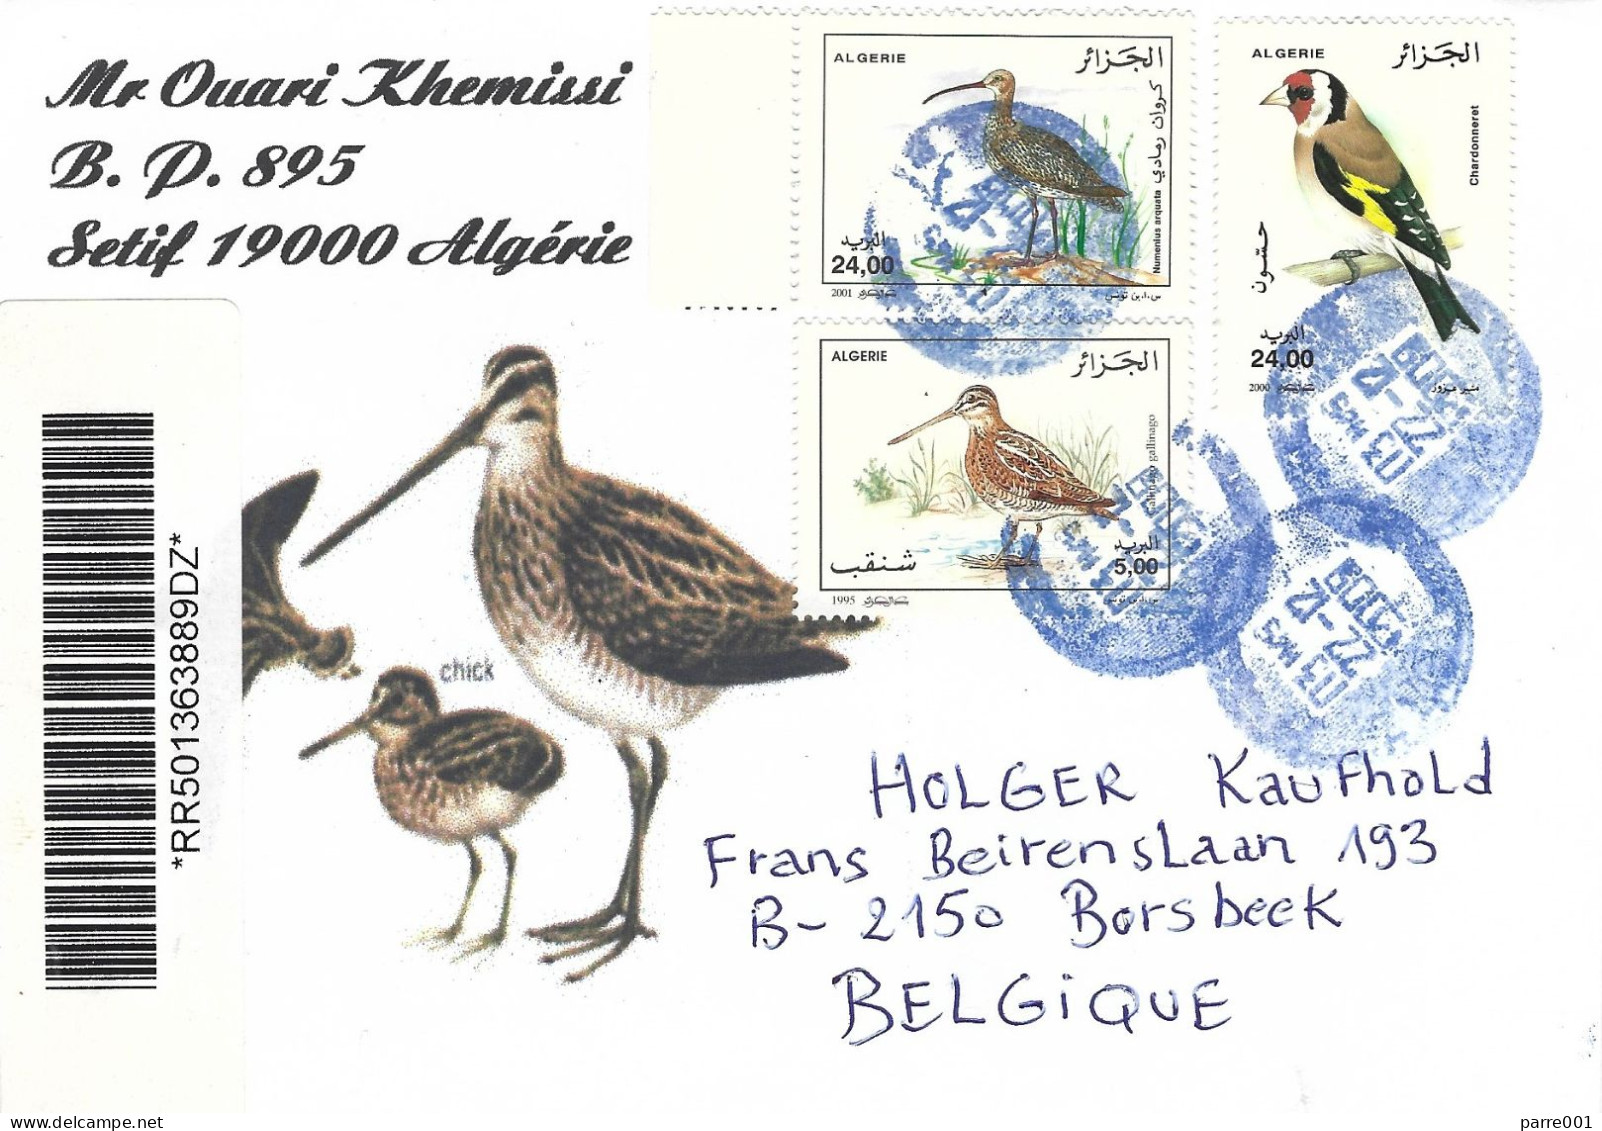 Algeria Algerie 2009 Alger Gold Finch Common Curlew Numenius Arquata Registered Cover - Sperlingsvögel & Singvögel